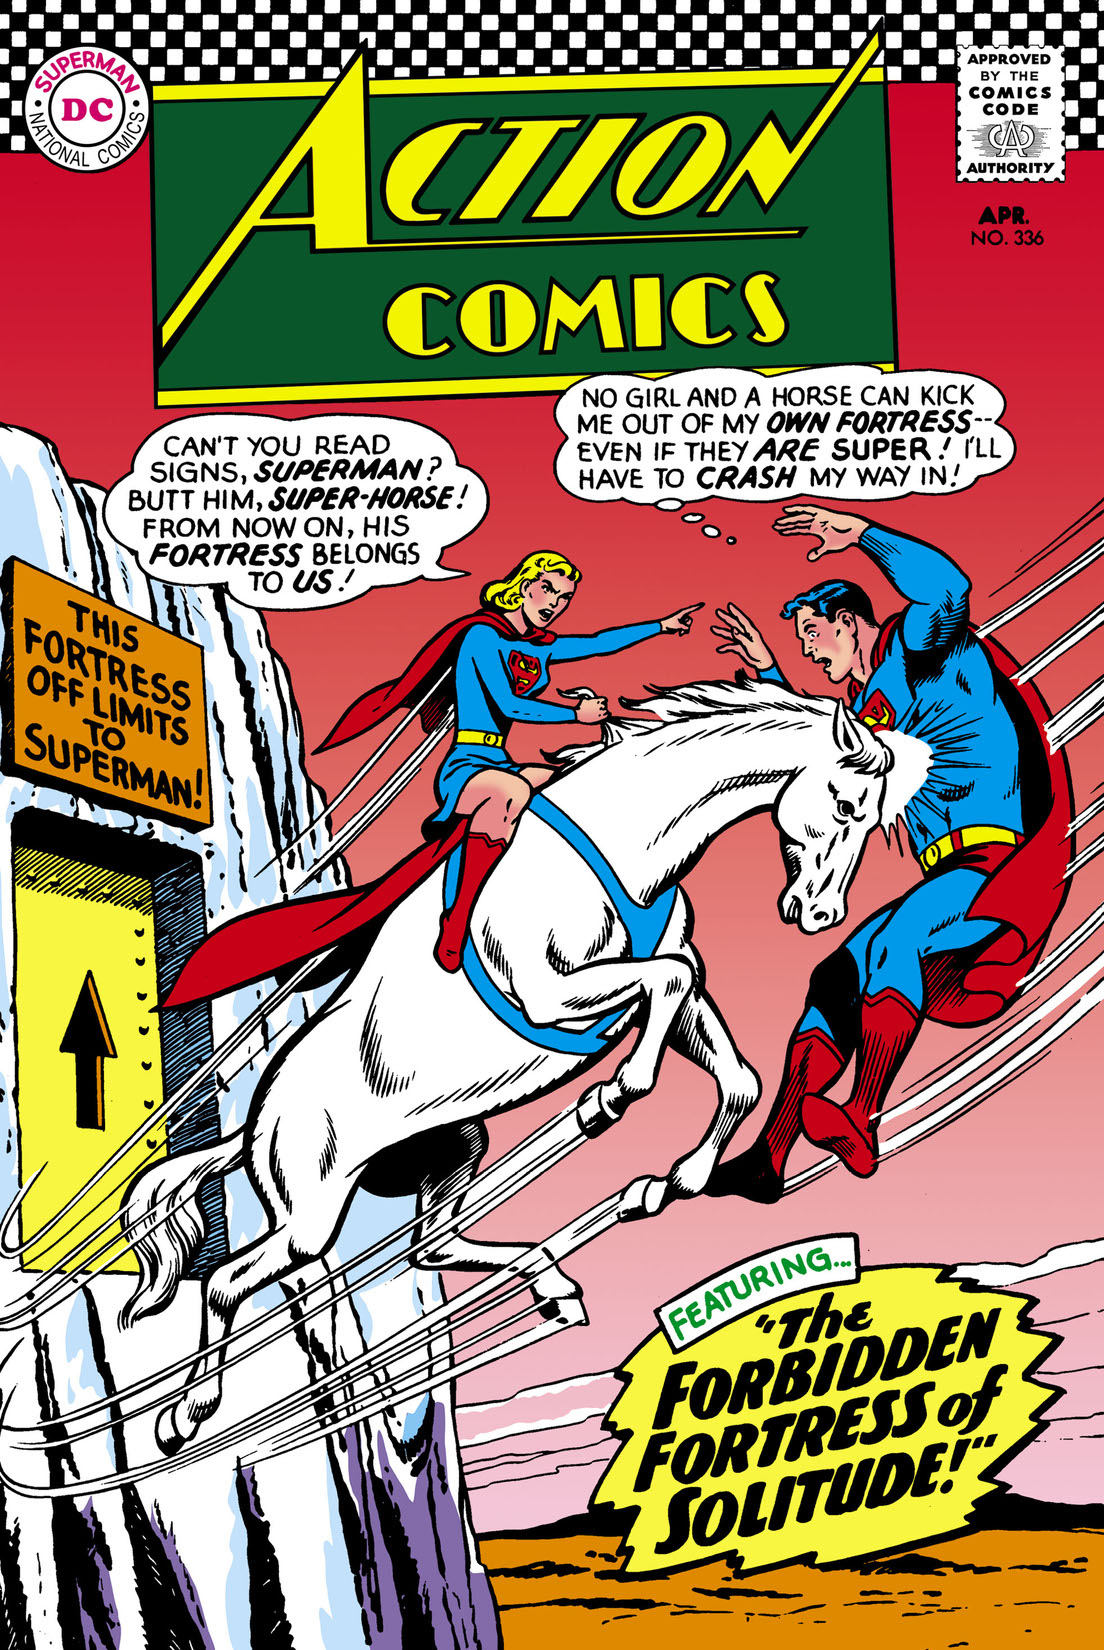 Action Comics (1938-2011) #336 preview images